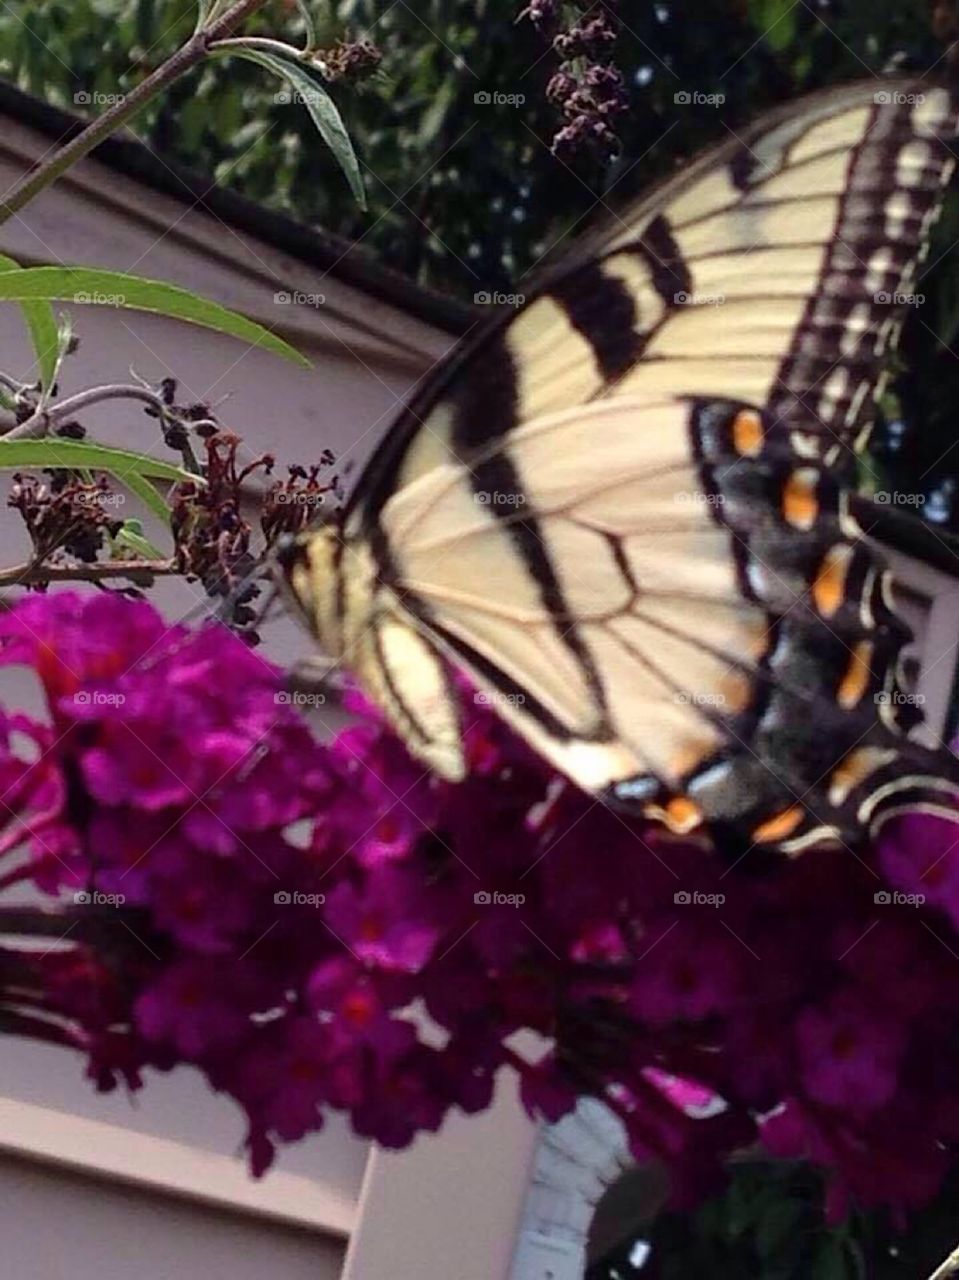 Butterfly on a butterfly bush 💕